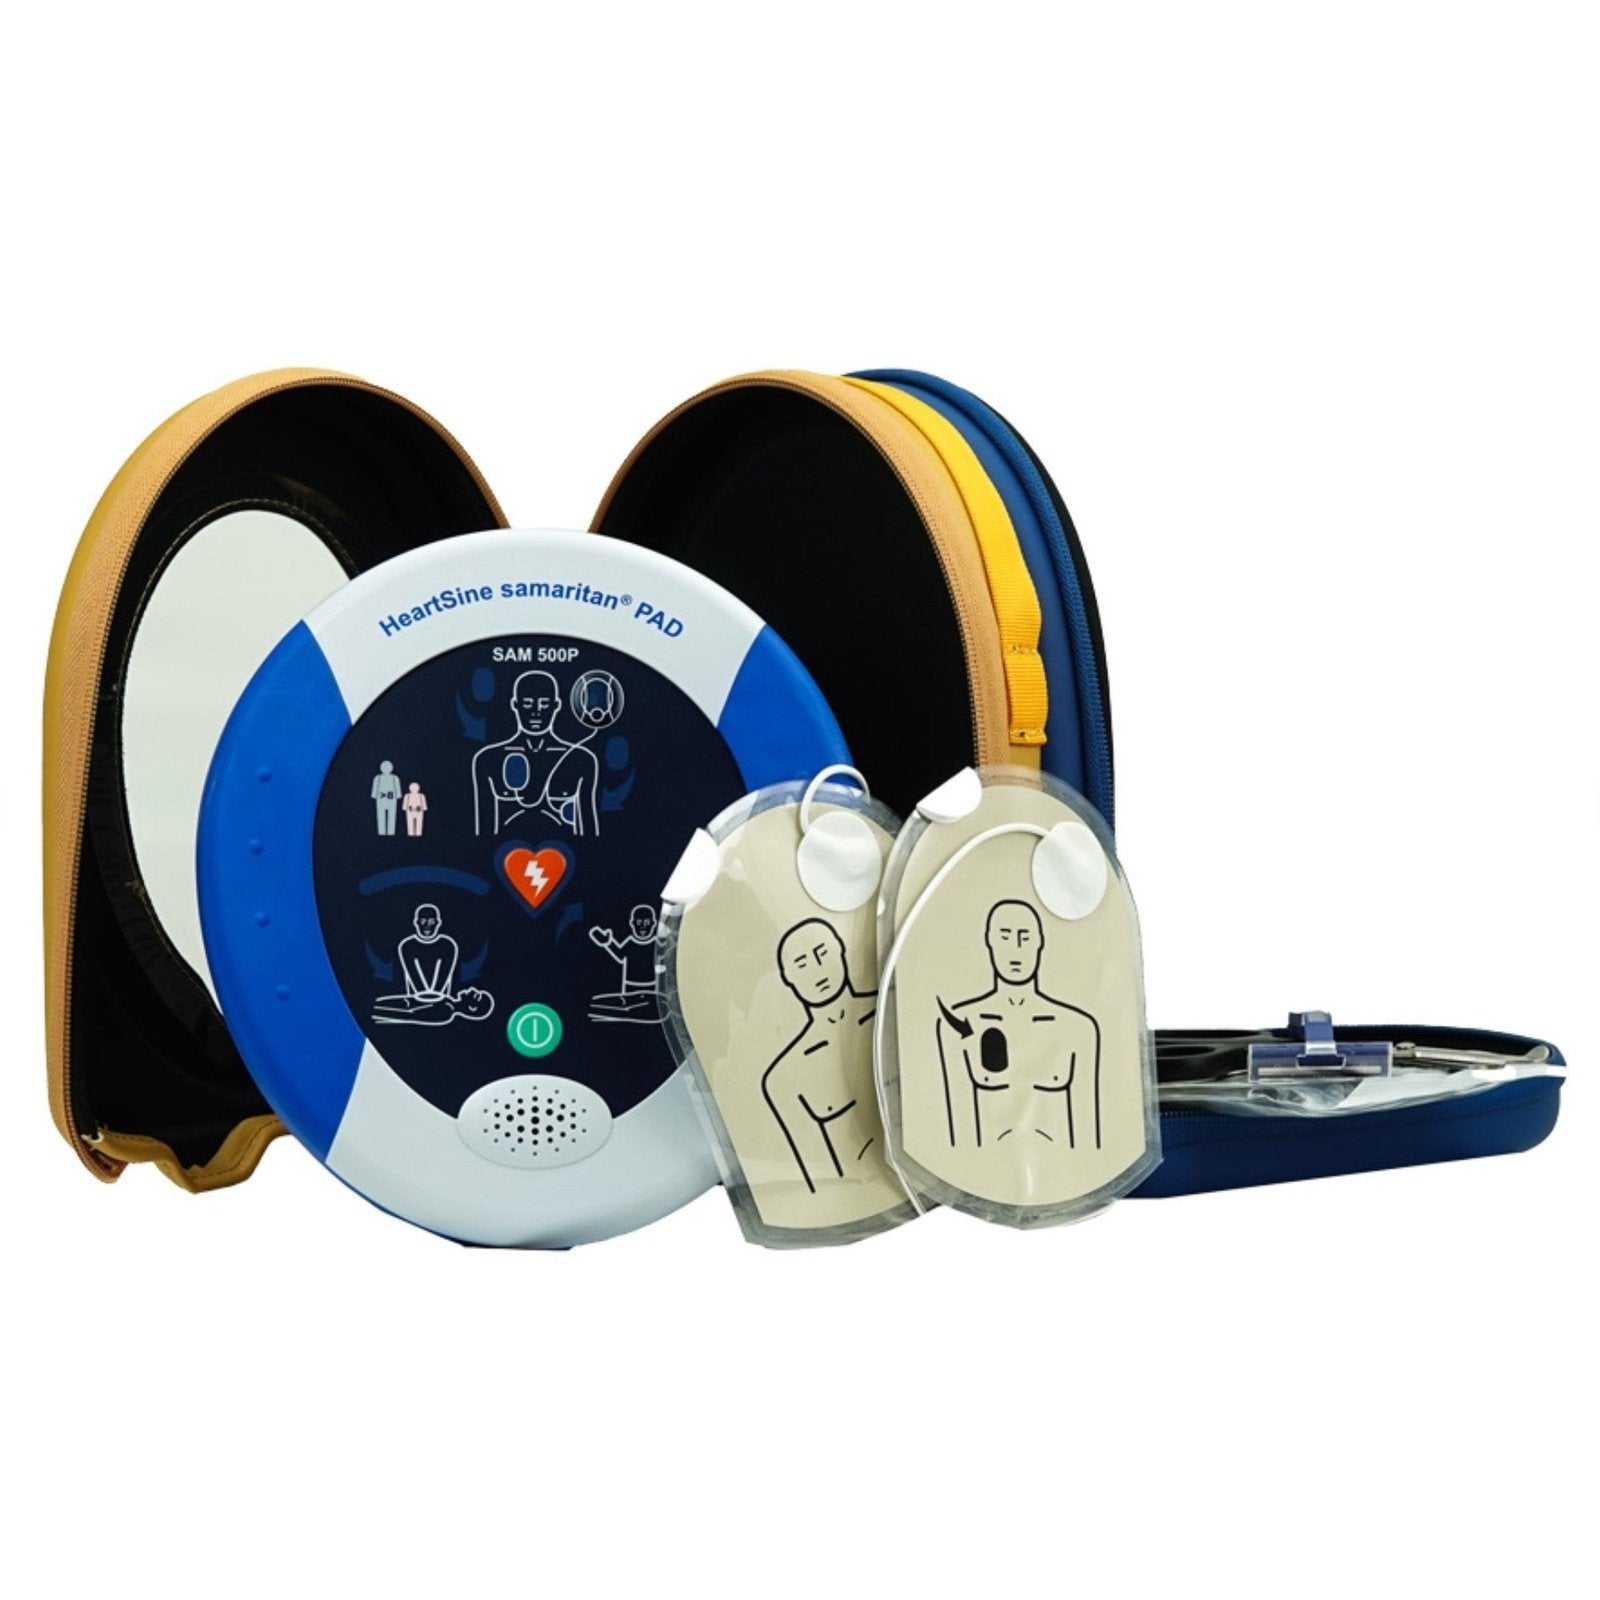 Defibrillator SAM 500P (HeartSine)